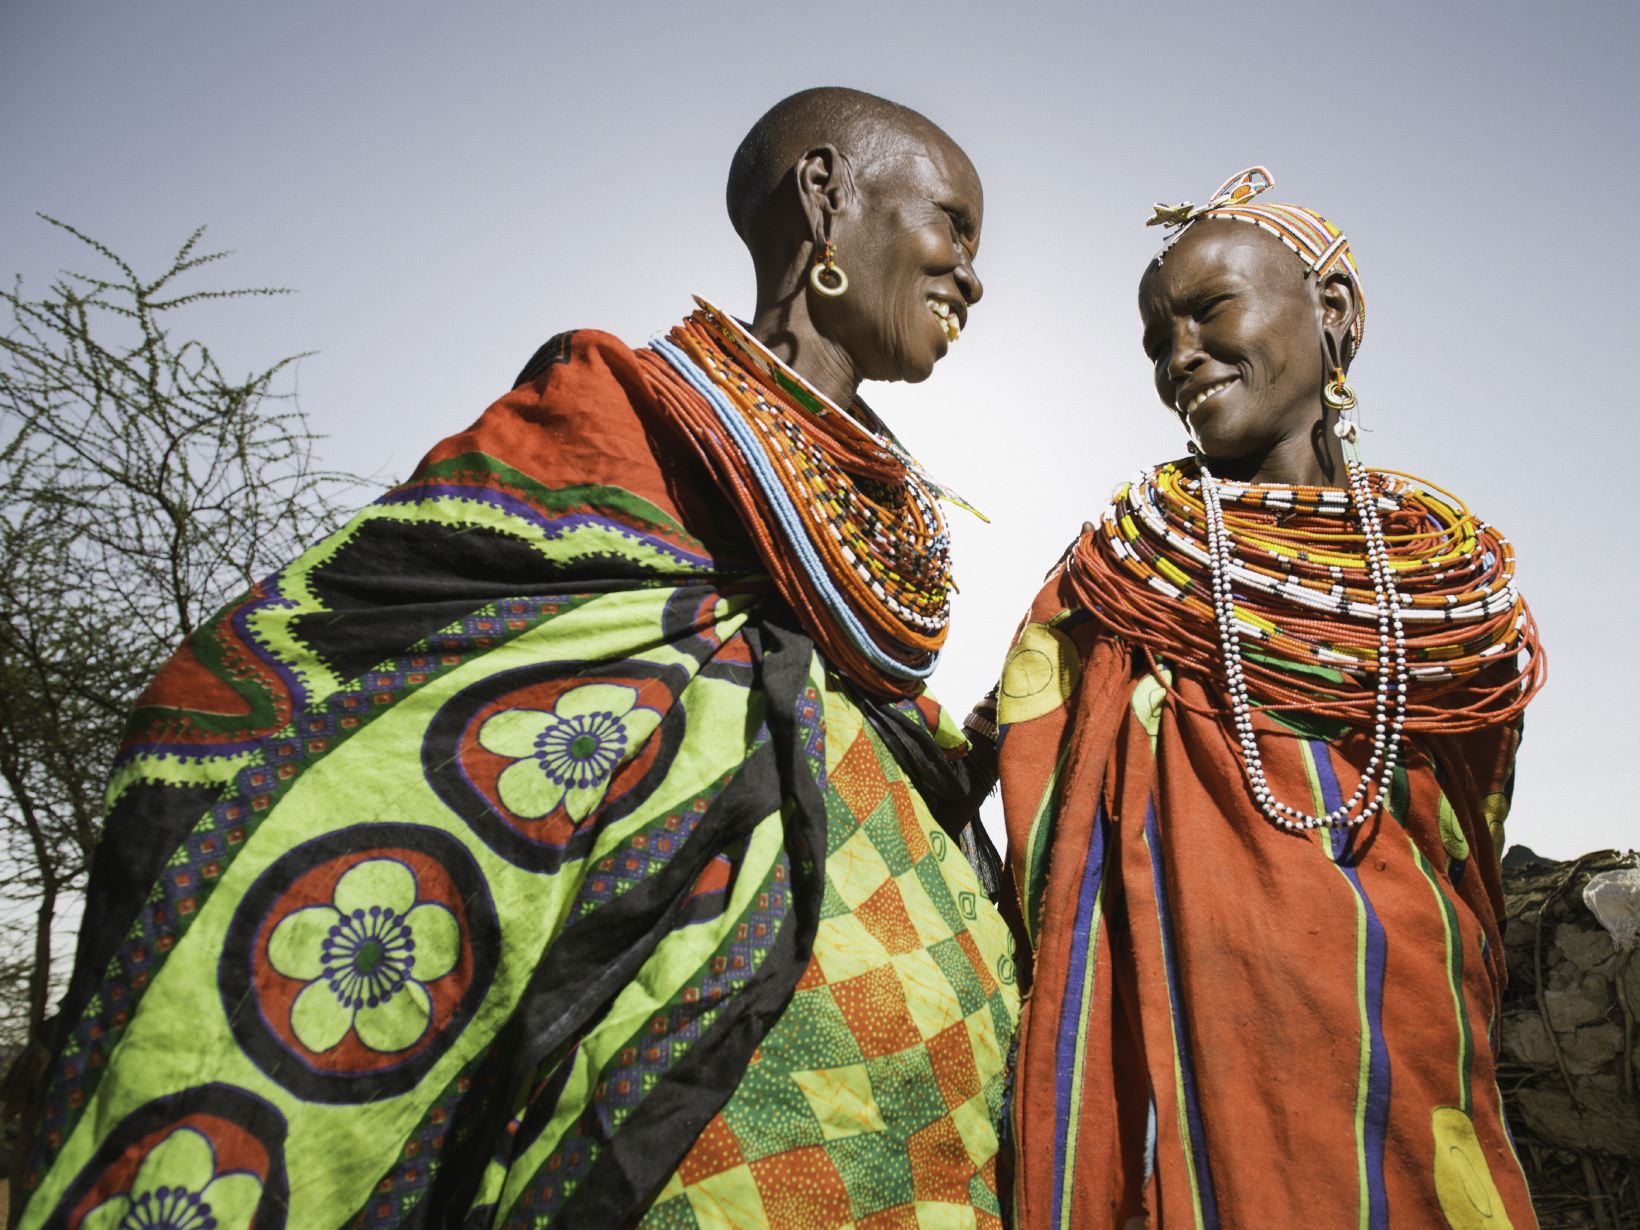 Two Samburu women laughing together.